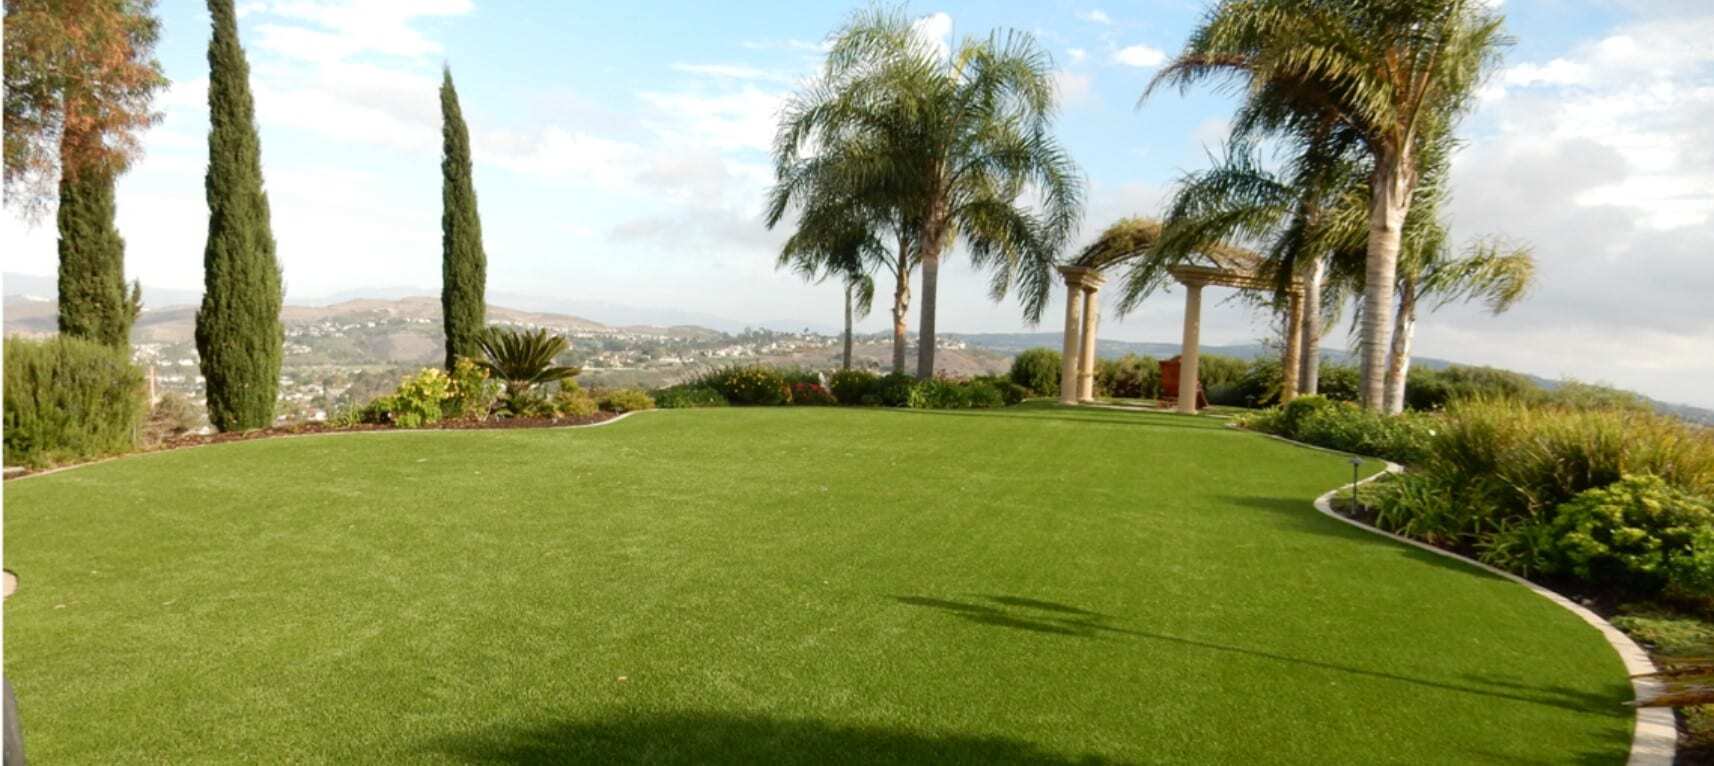 Residential Artificial Grass Landscapes, Walkways, Patios, Yorba Linda